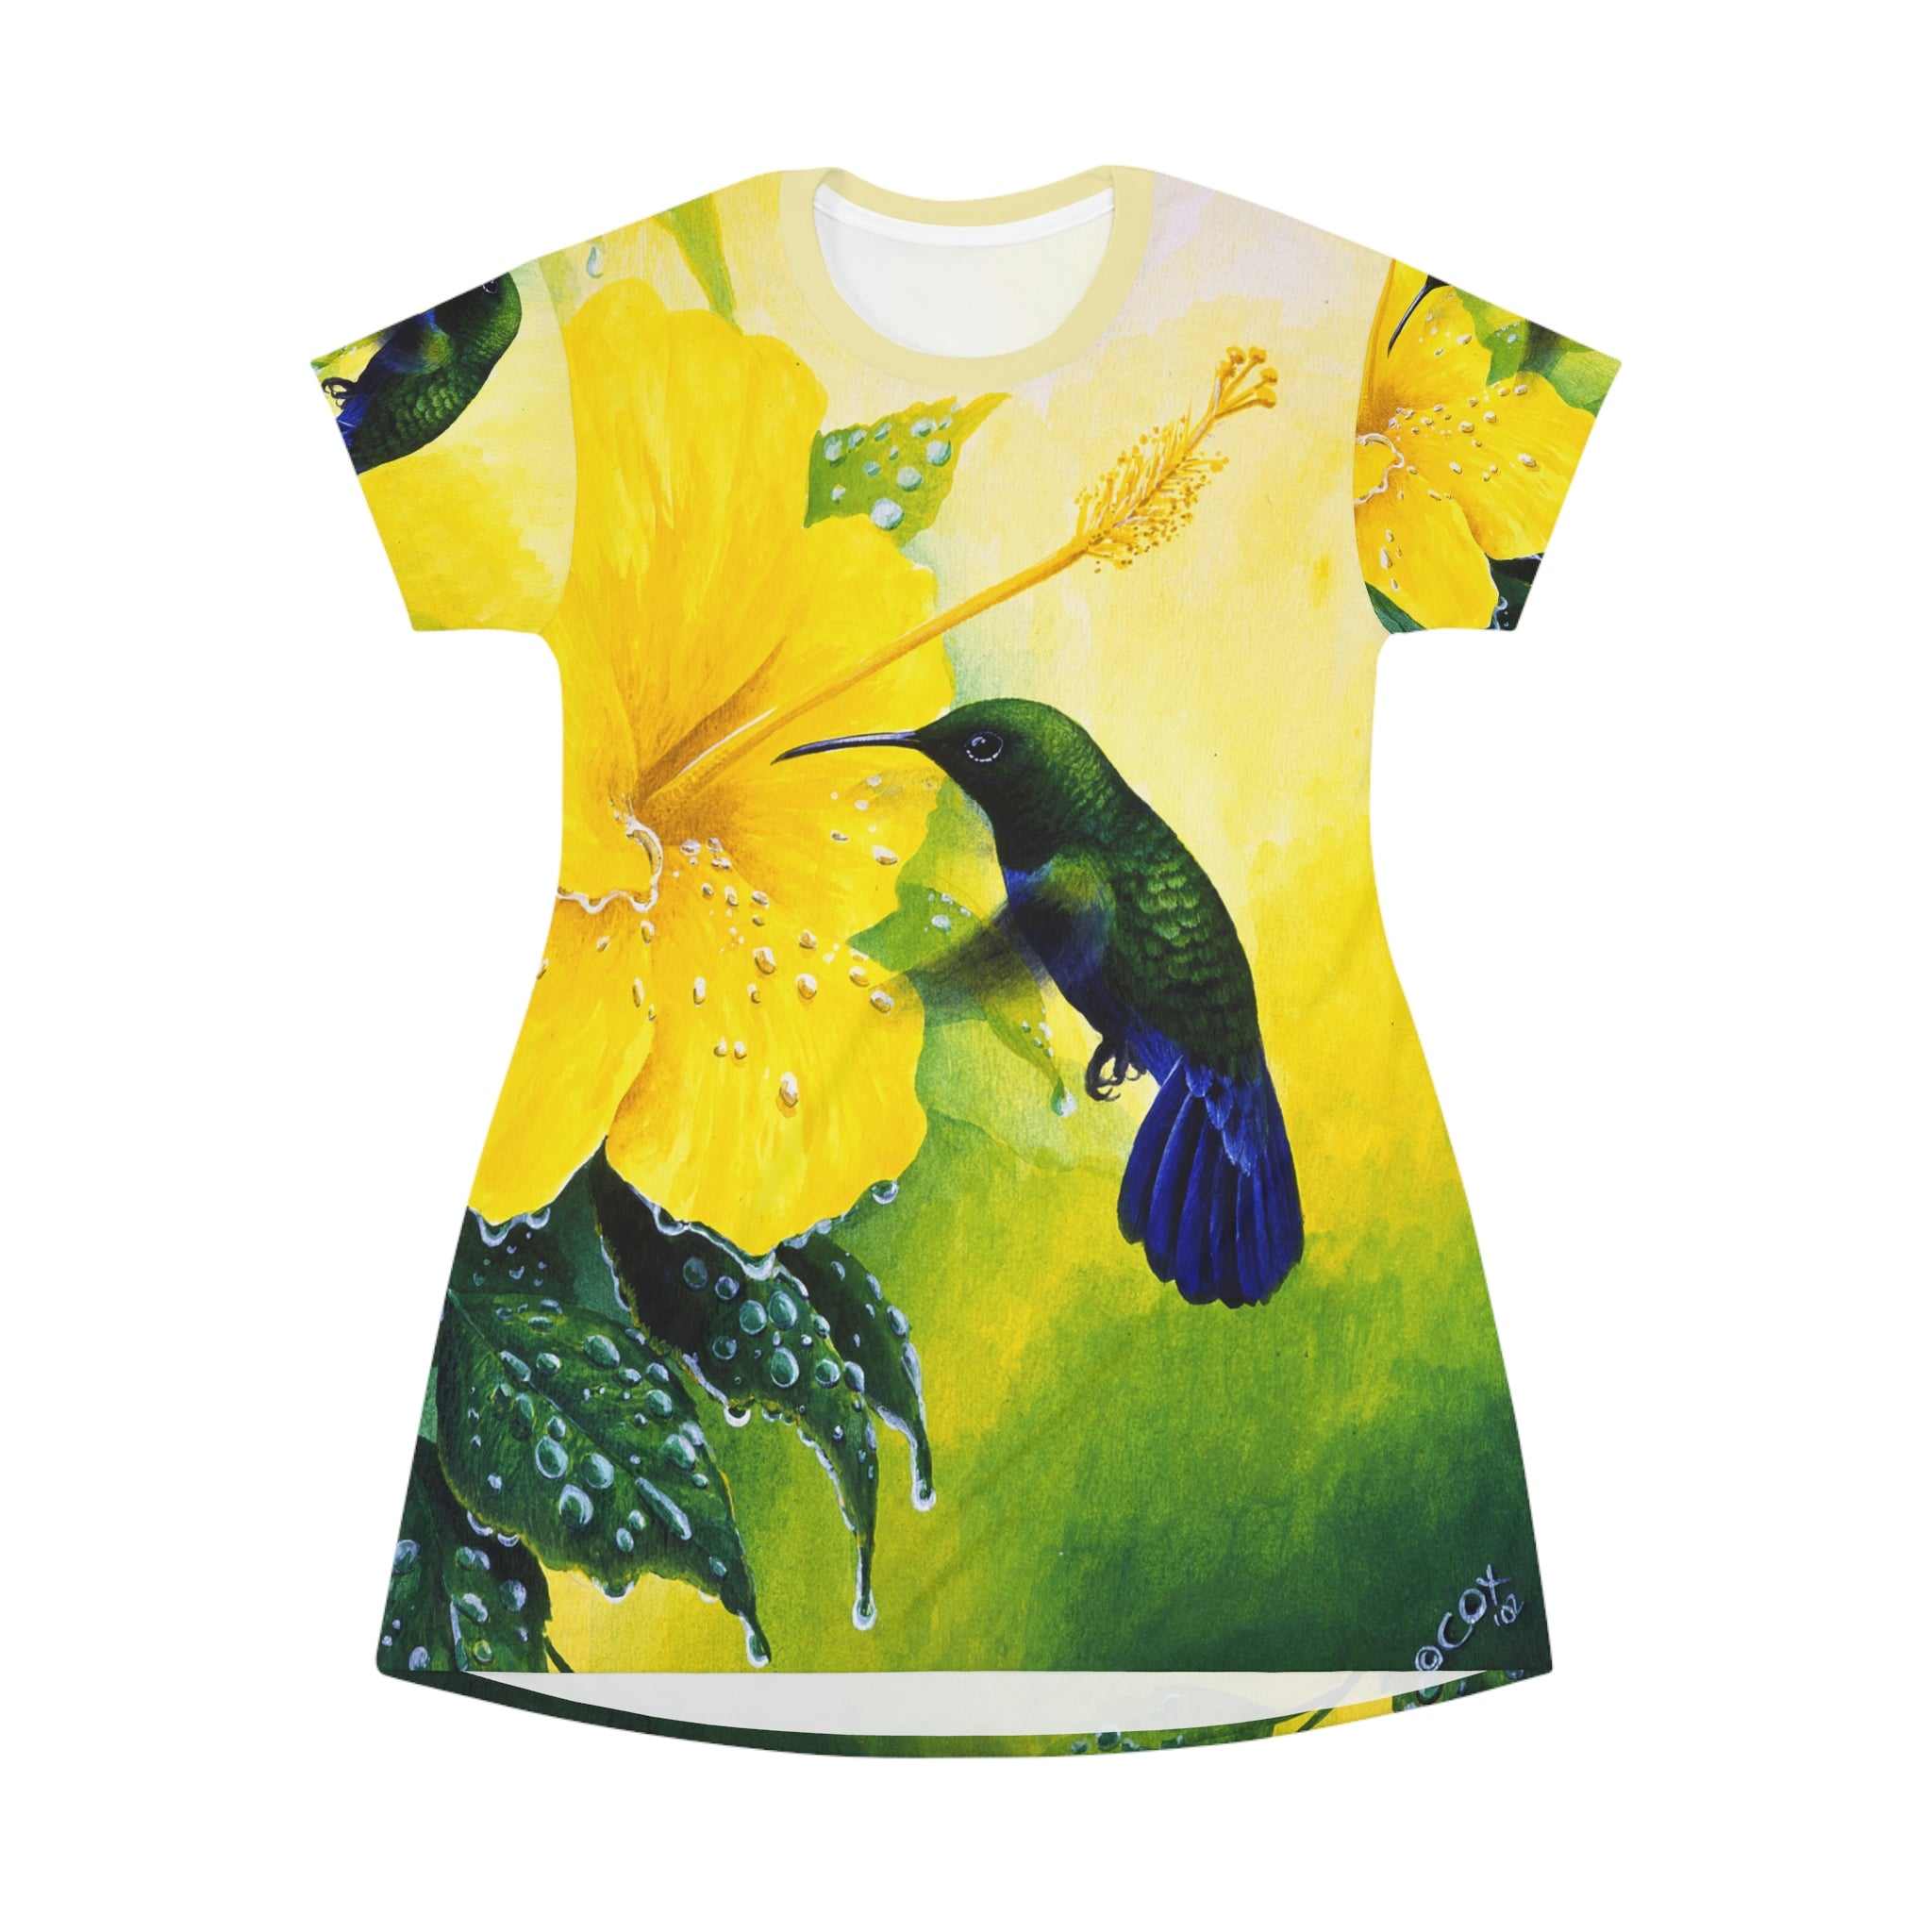 Hummingbird & Hibiscus, All Over Print T-Shirt Dress, Women's T-shirt dress, Beach dress, AOP dress, Wearable art, Original artwork